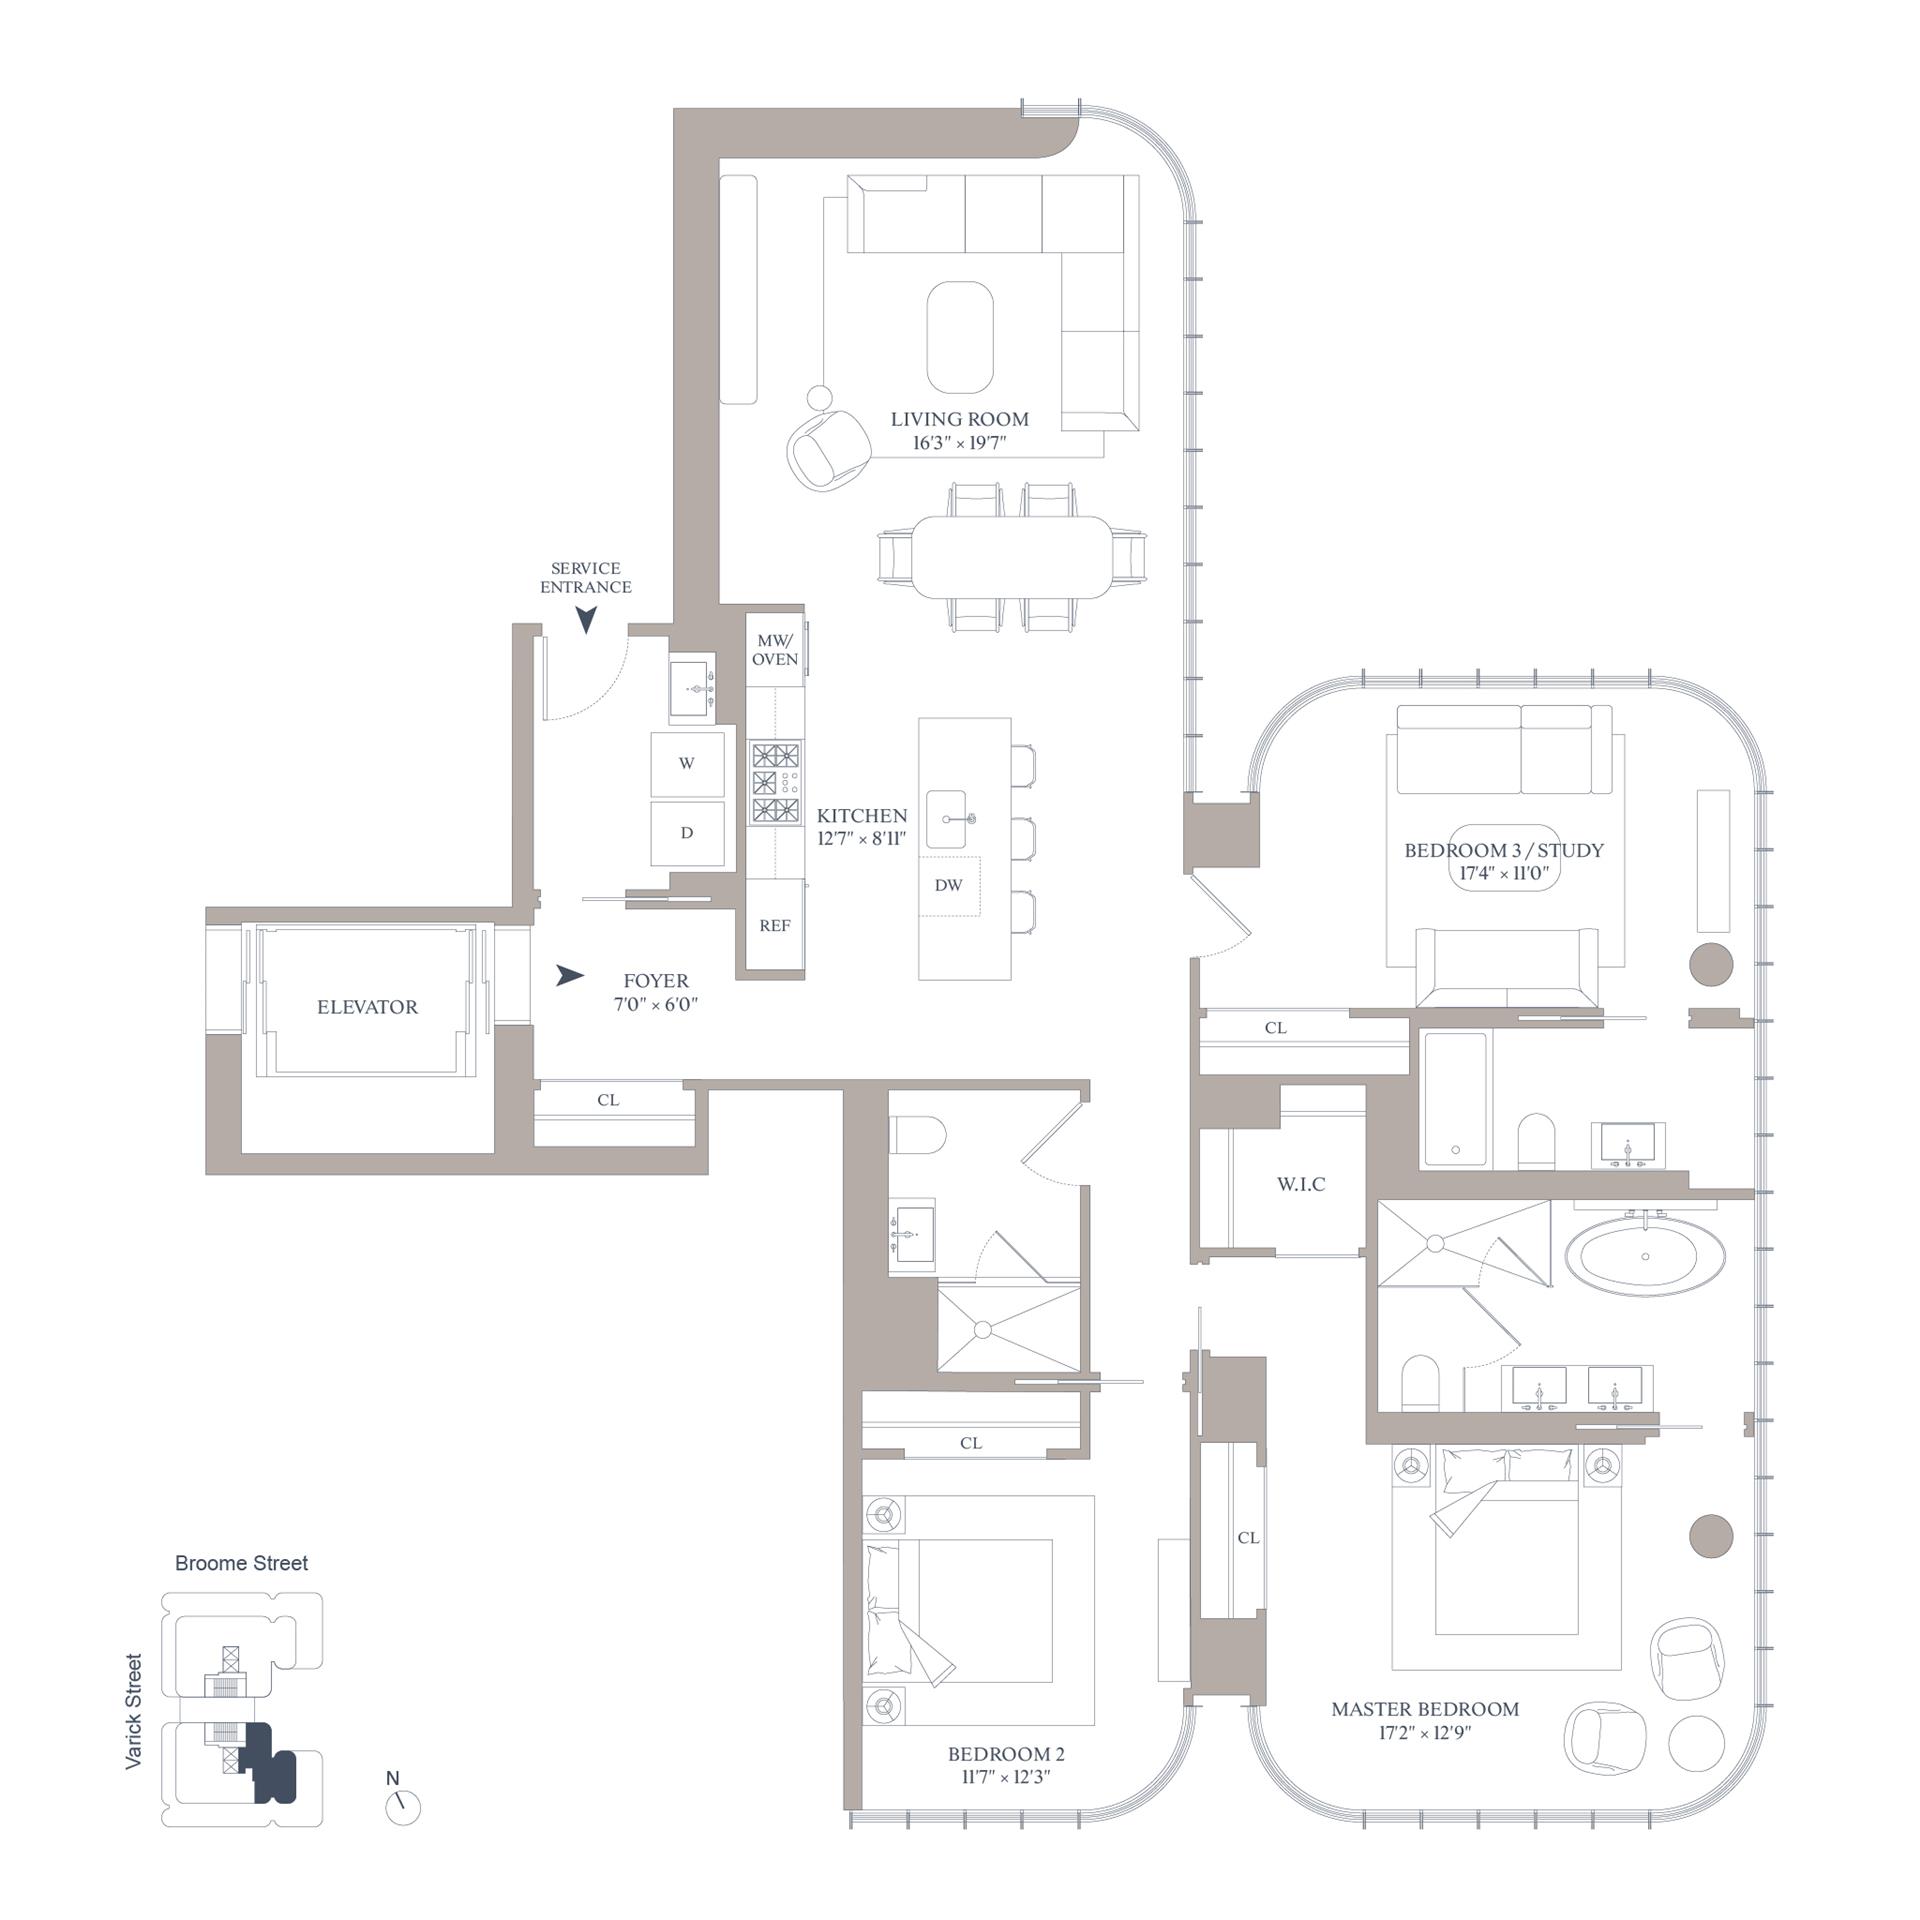 Floorplan for 565 Broome Street, S23B